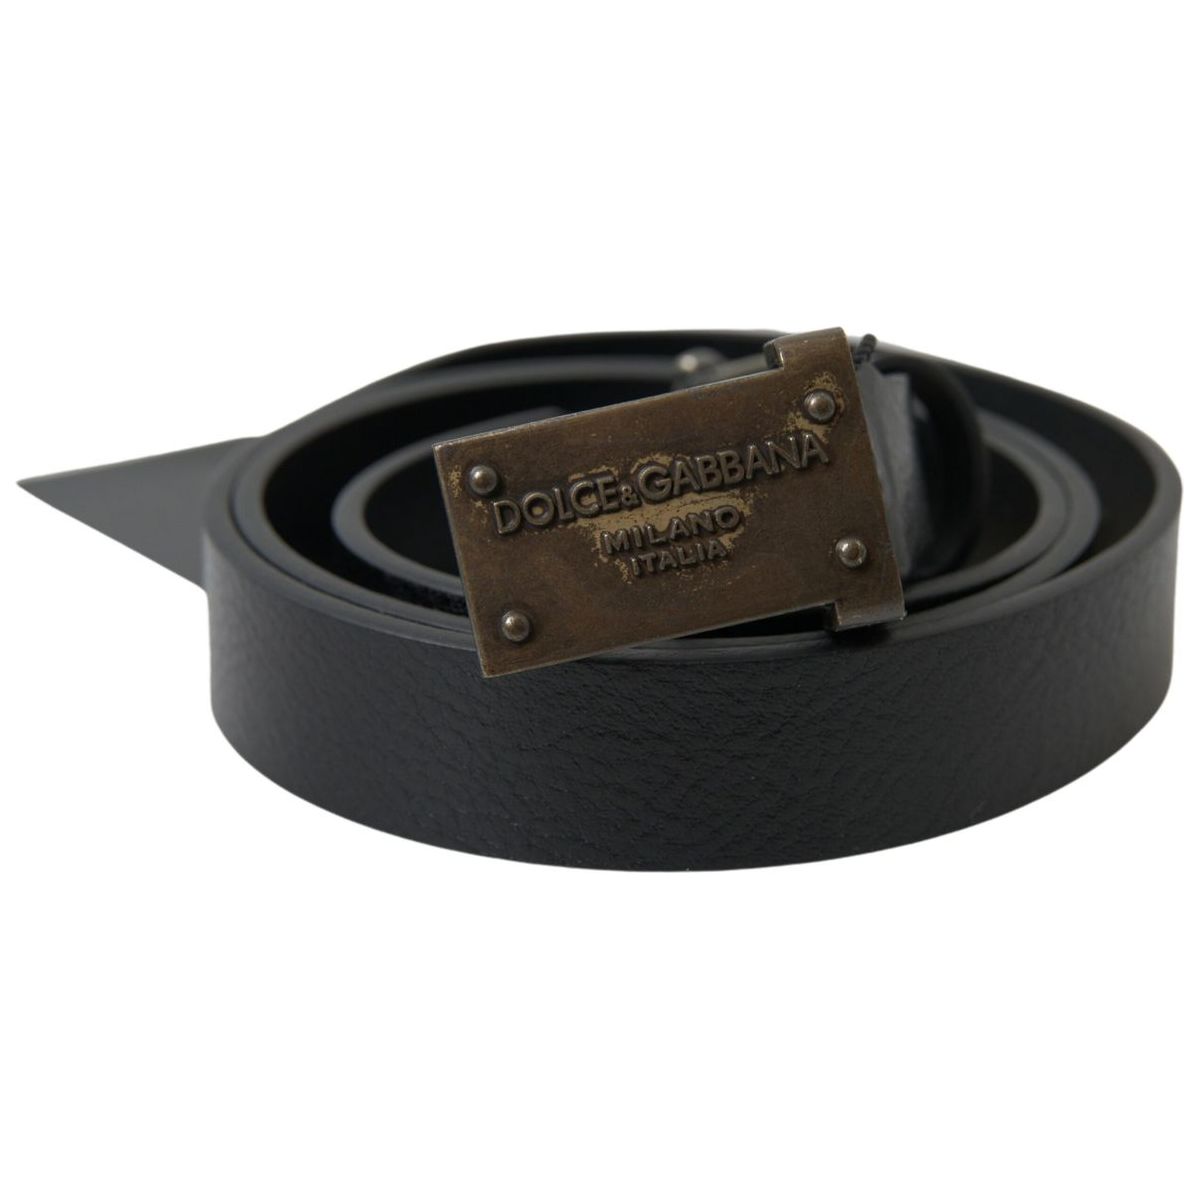 Elegant Black Leather Belt - Metal Buckle Closure Dolce & Gabbana